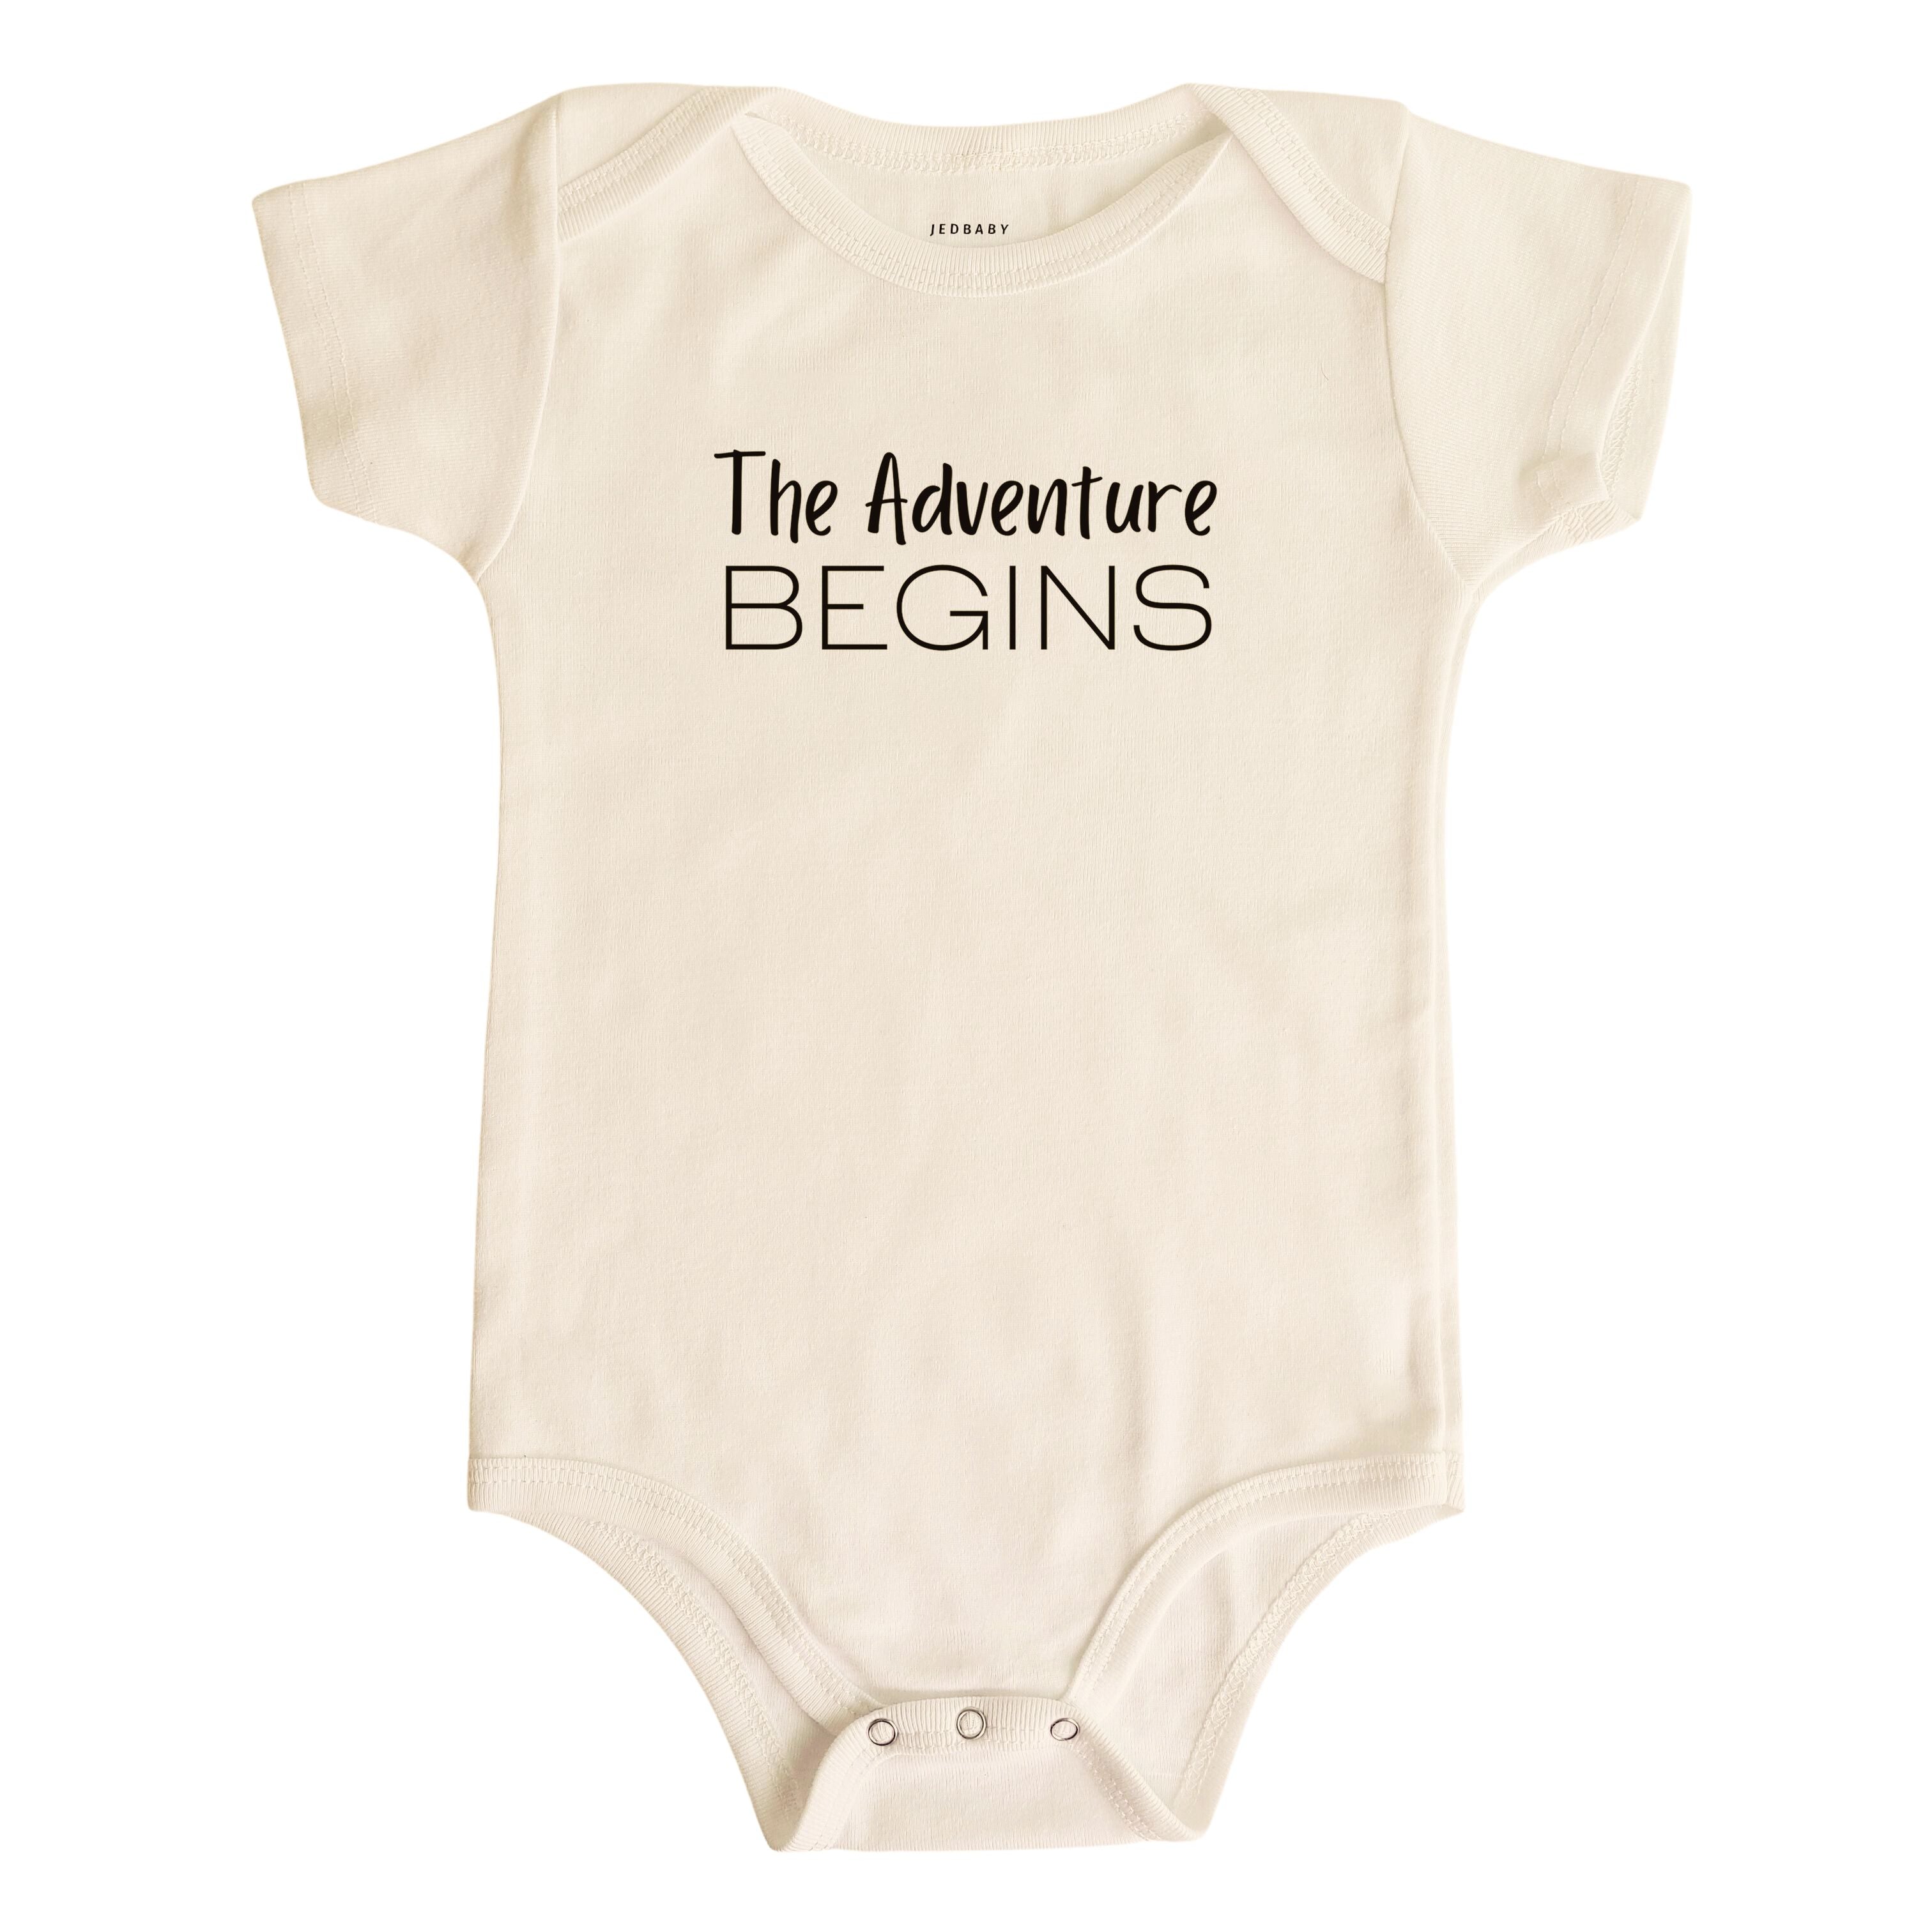 Jedbaby The Adventure Begins Short Sleeve Baby Onesie Bodysuit